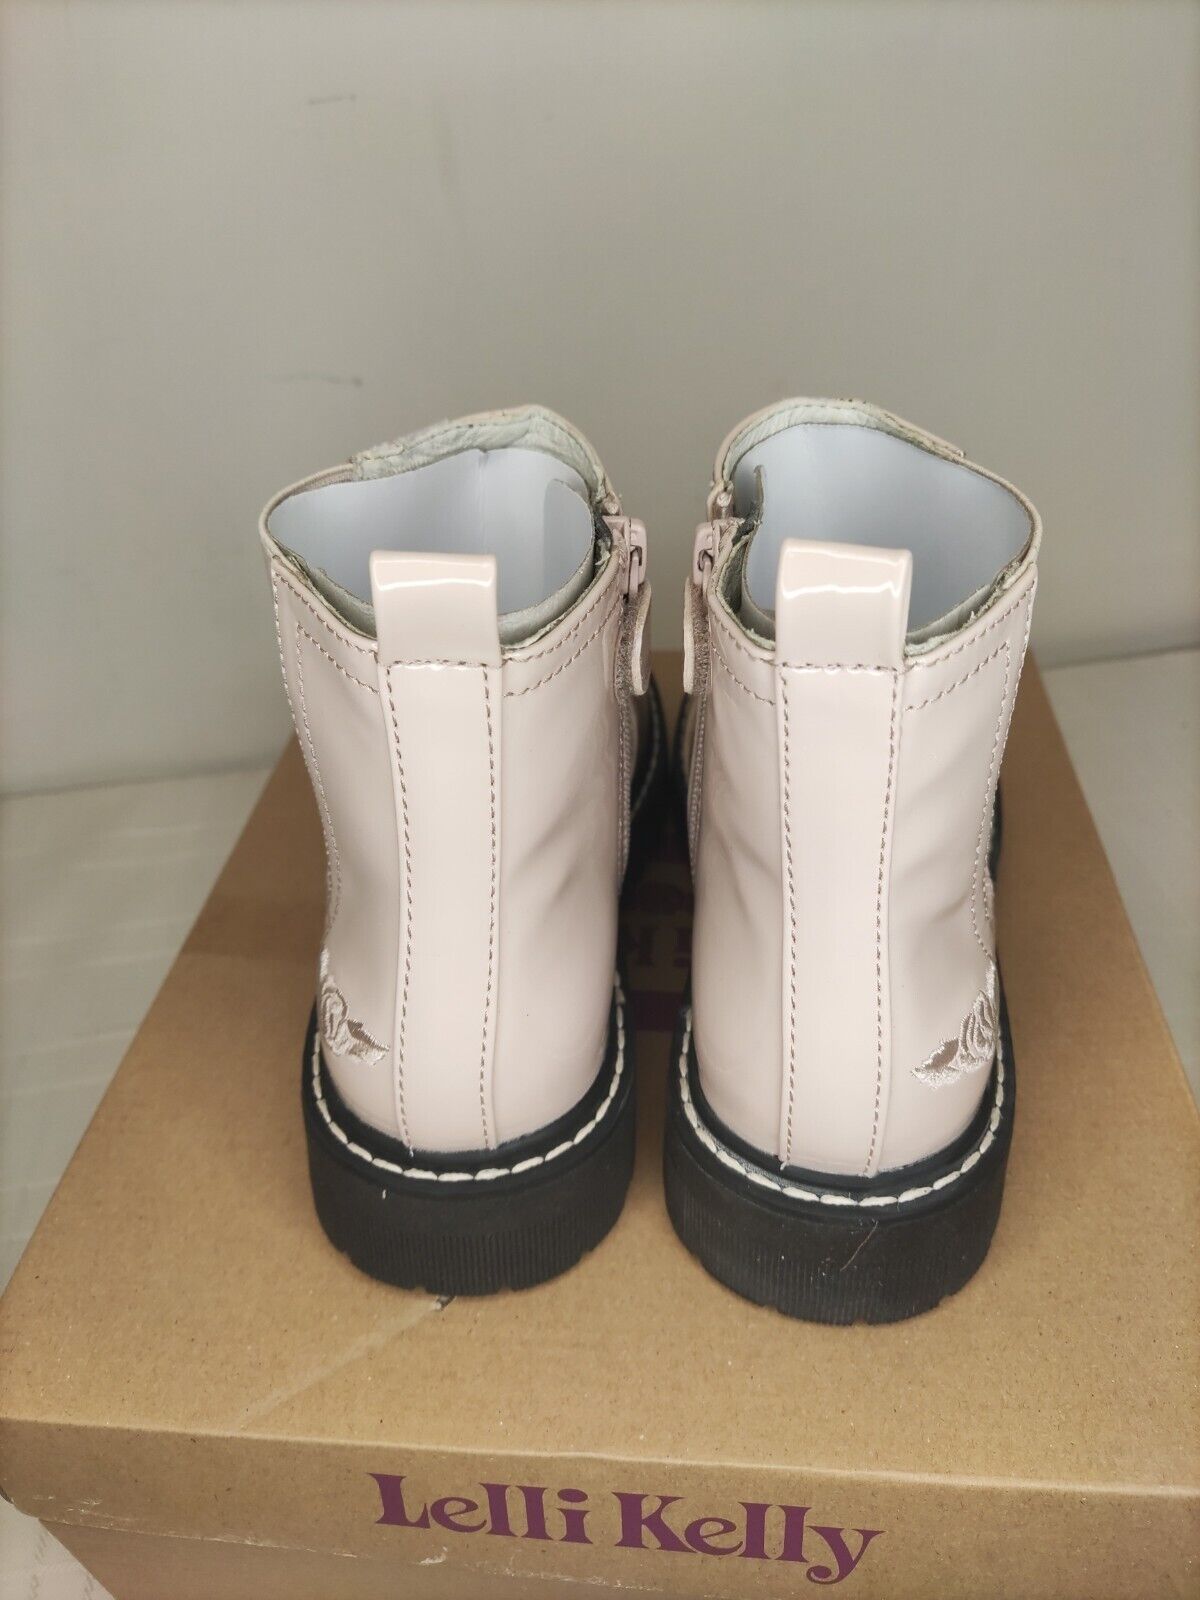 Lelli Kelly LK5552 (FCH6) Ruth Nude Vernice Patent Ankle Boot UK 2.5.****VS1